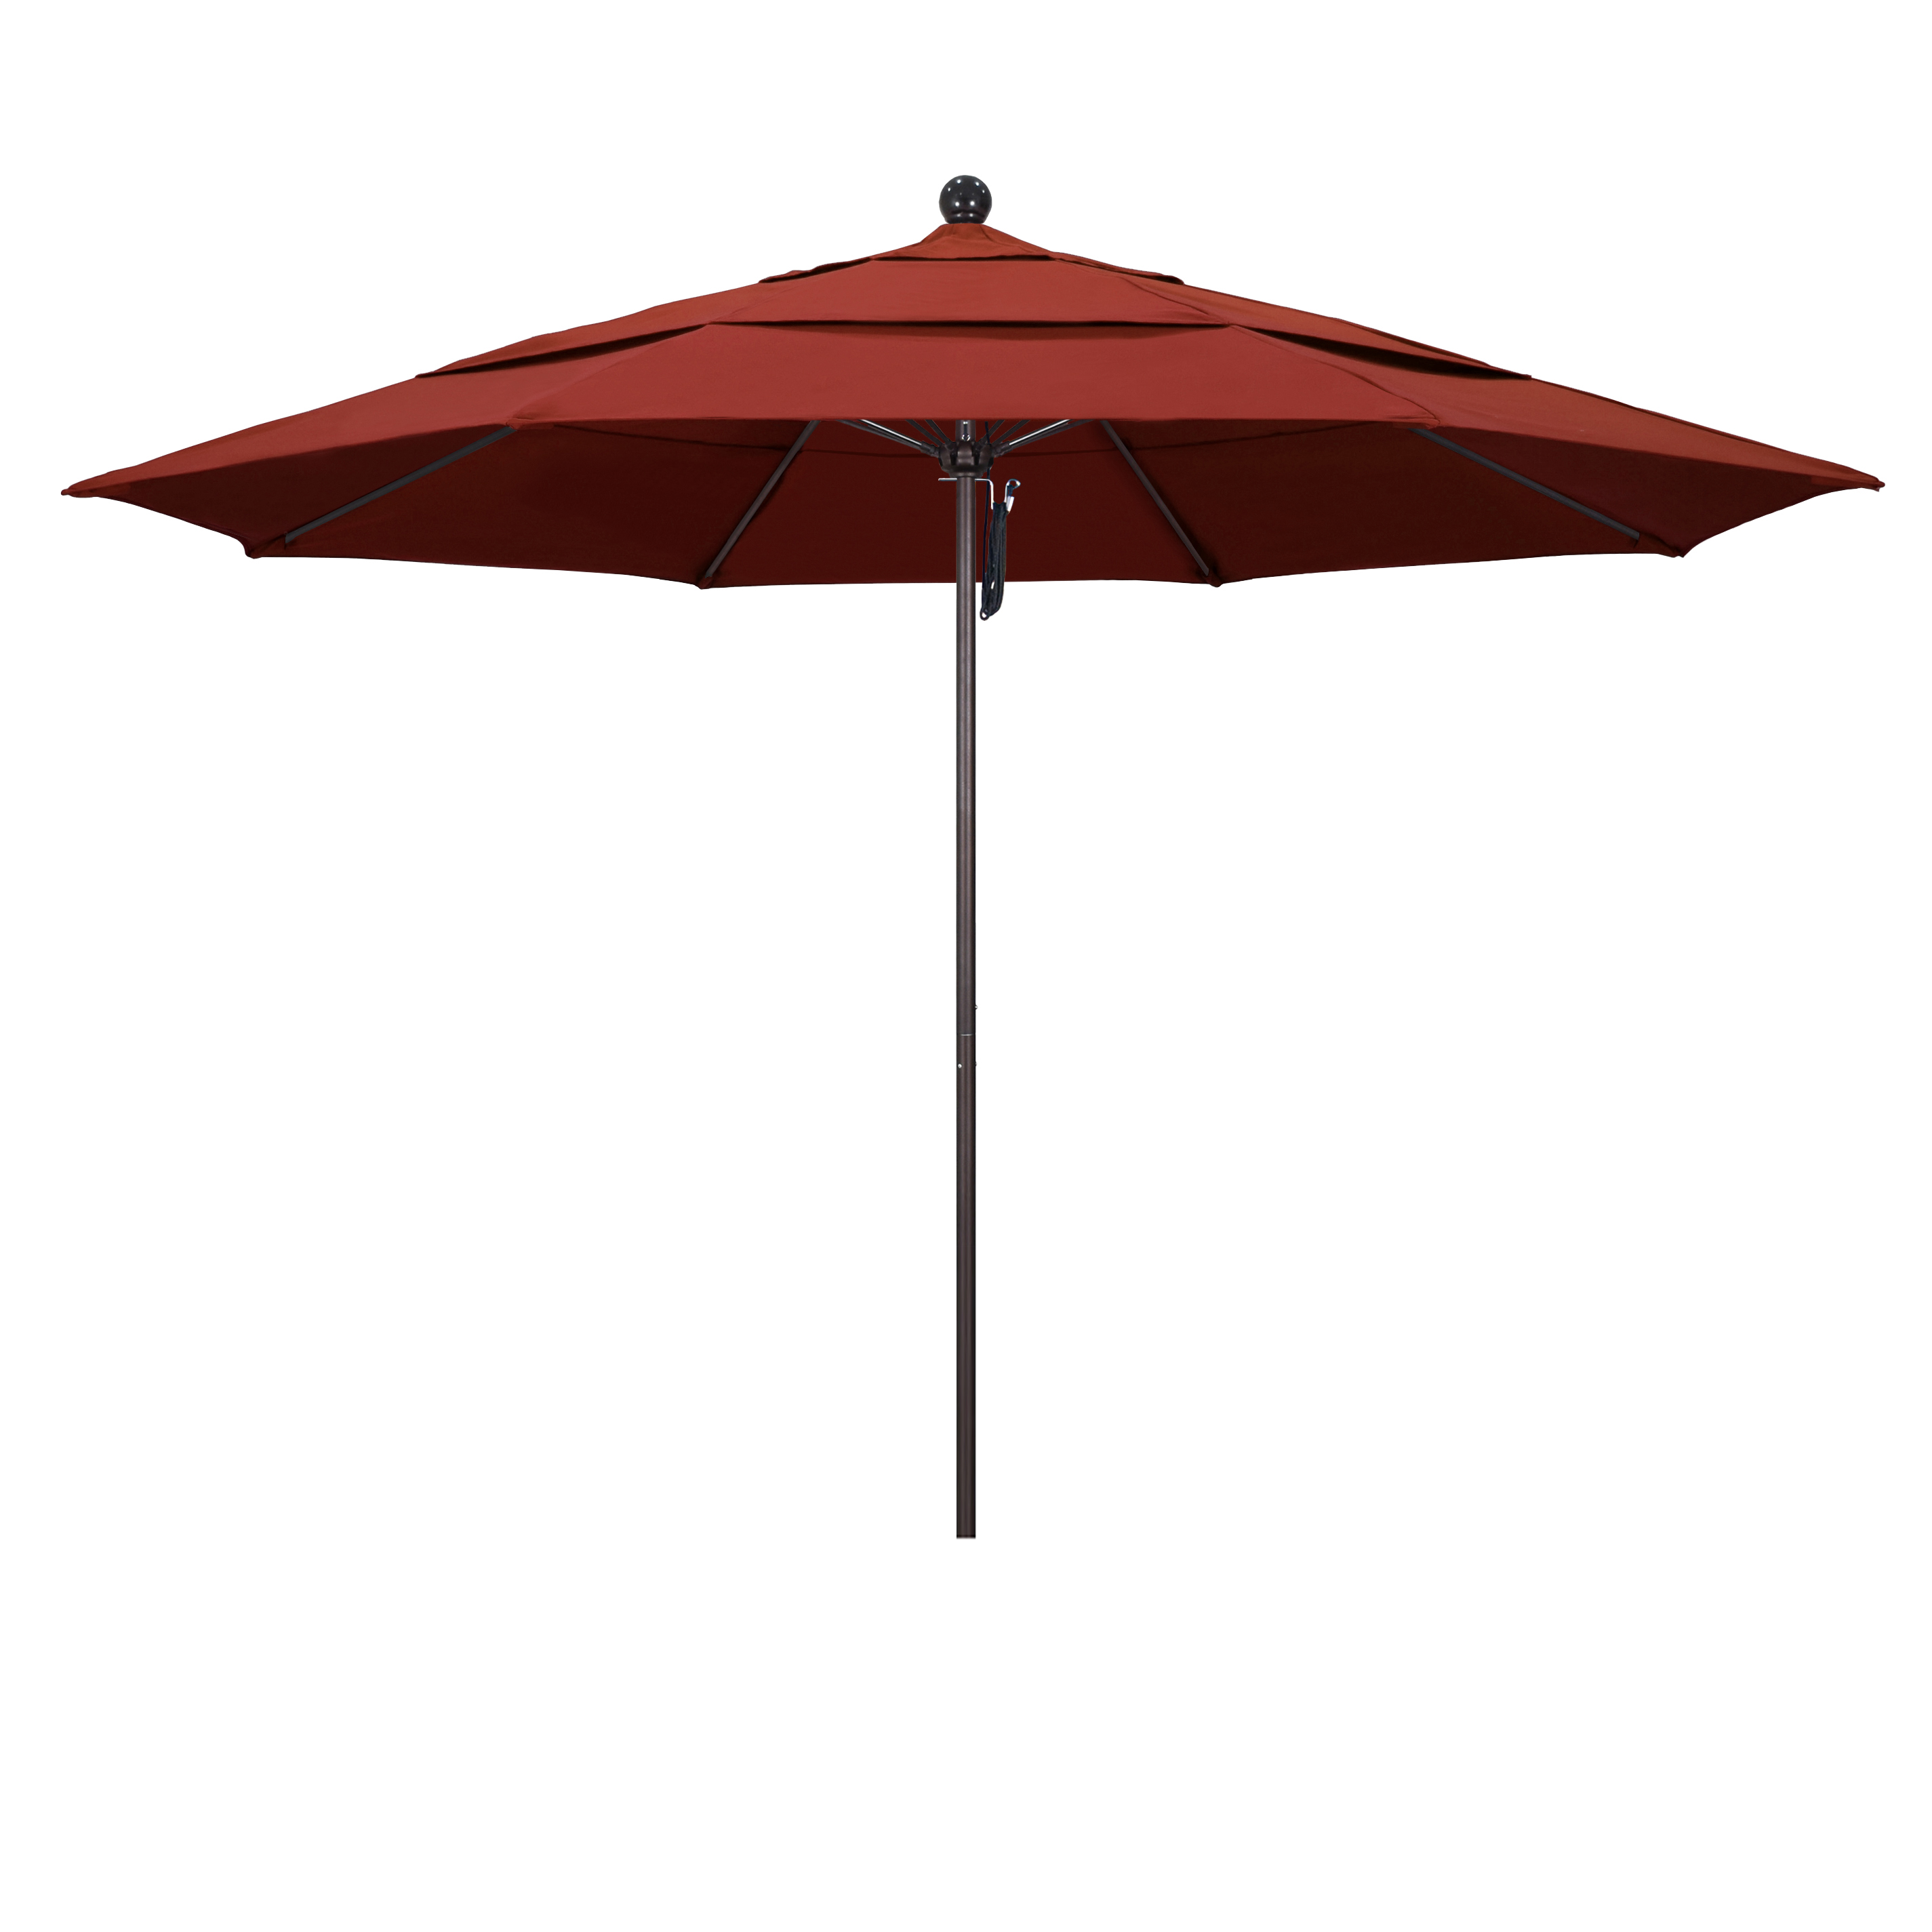 Picture of California Umbrella ALTO118117-5440-DWV 11 ft. Fiberglass Pulley Open Double Vents Market Umbrella - Bronze and Sunbrella-Terracotta